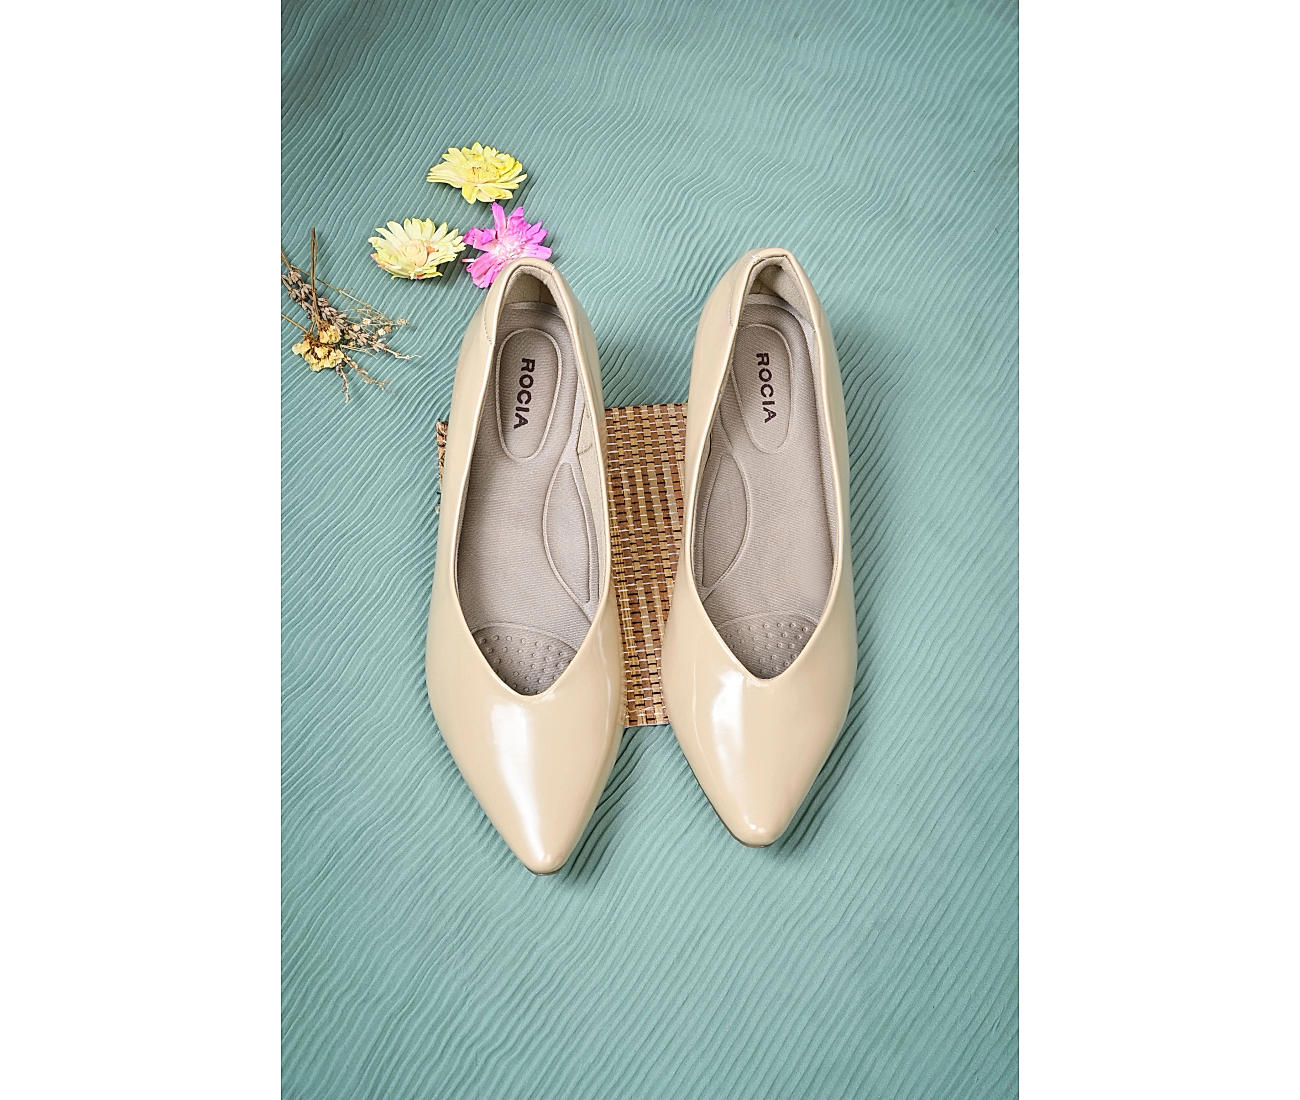 Mossimo Supply Co. | Shoes | Mossimo 95 Black Glitter Heels | Poshmark